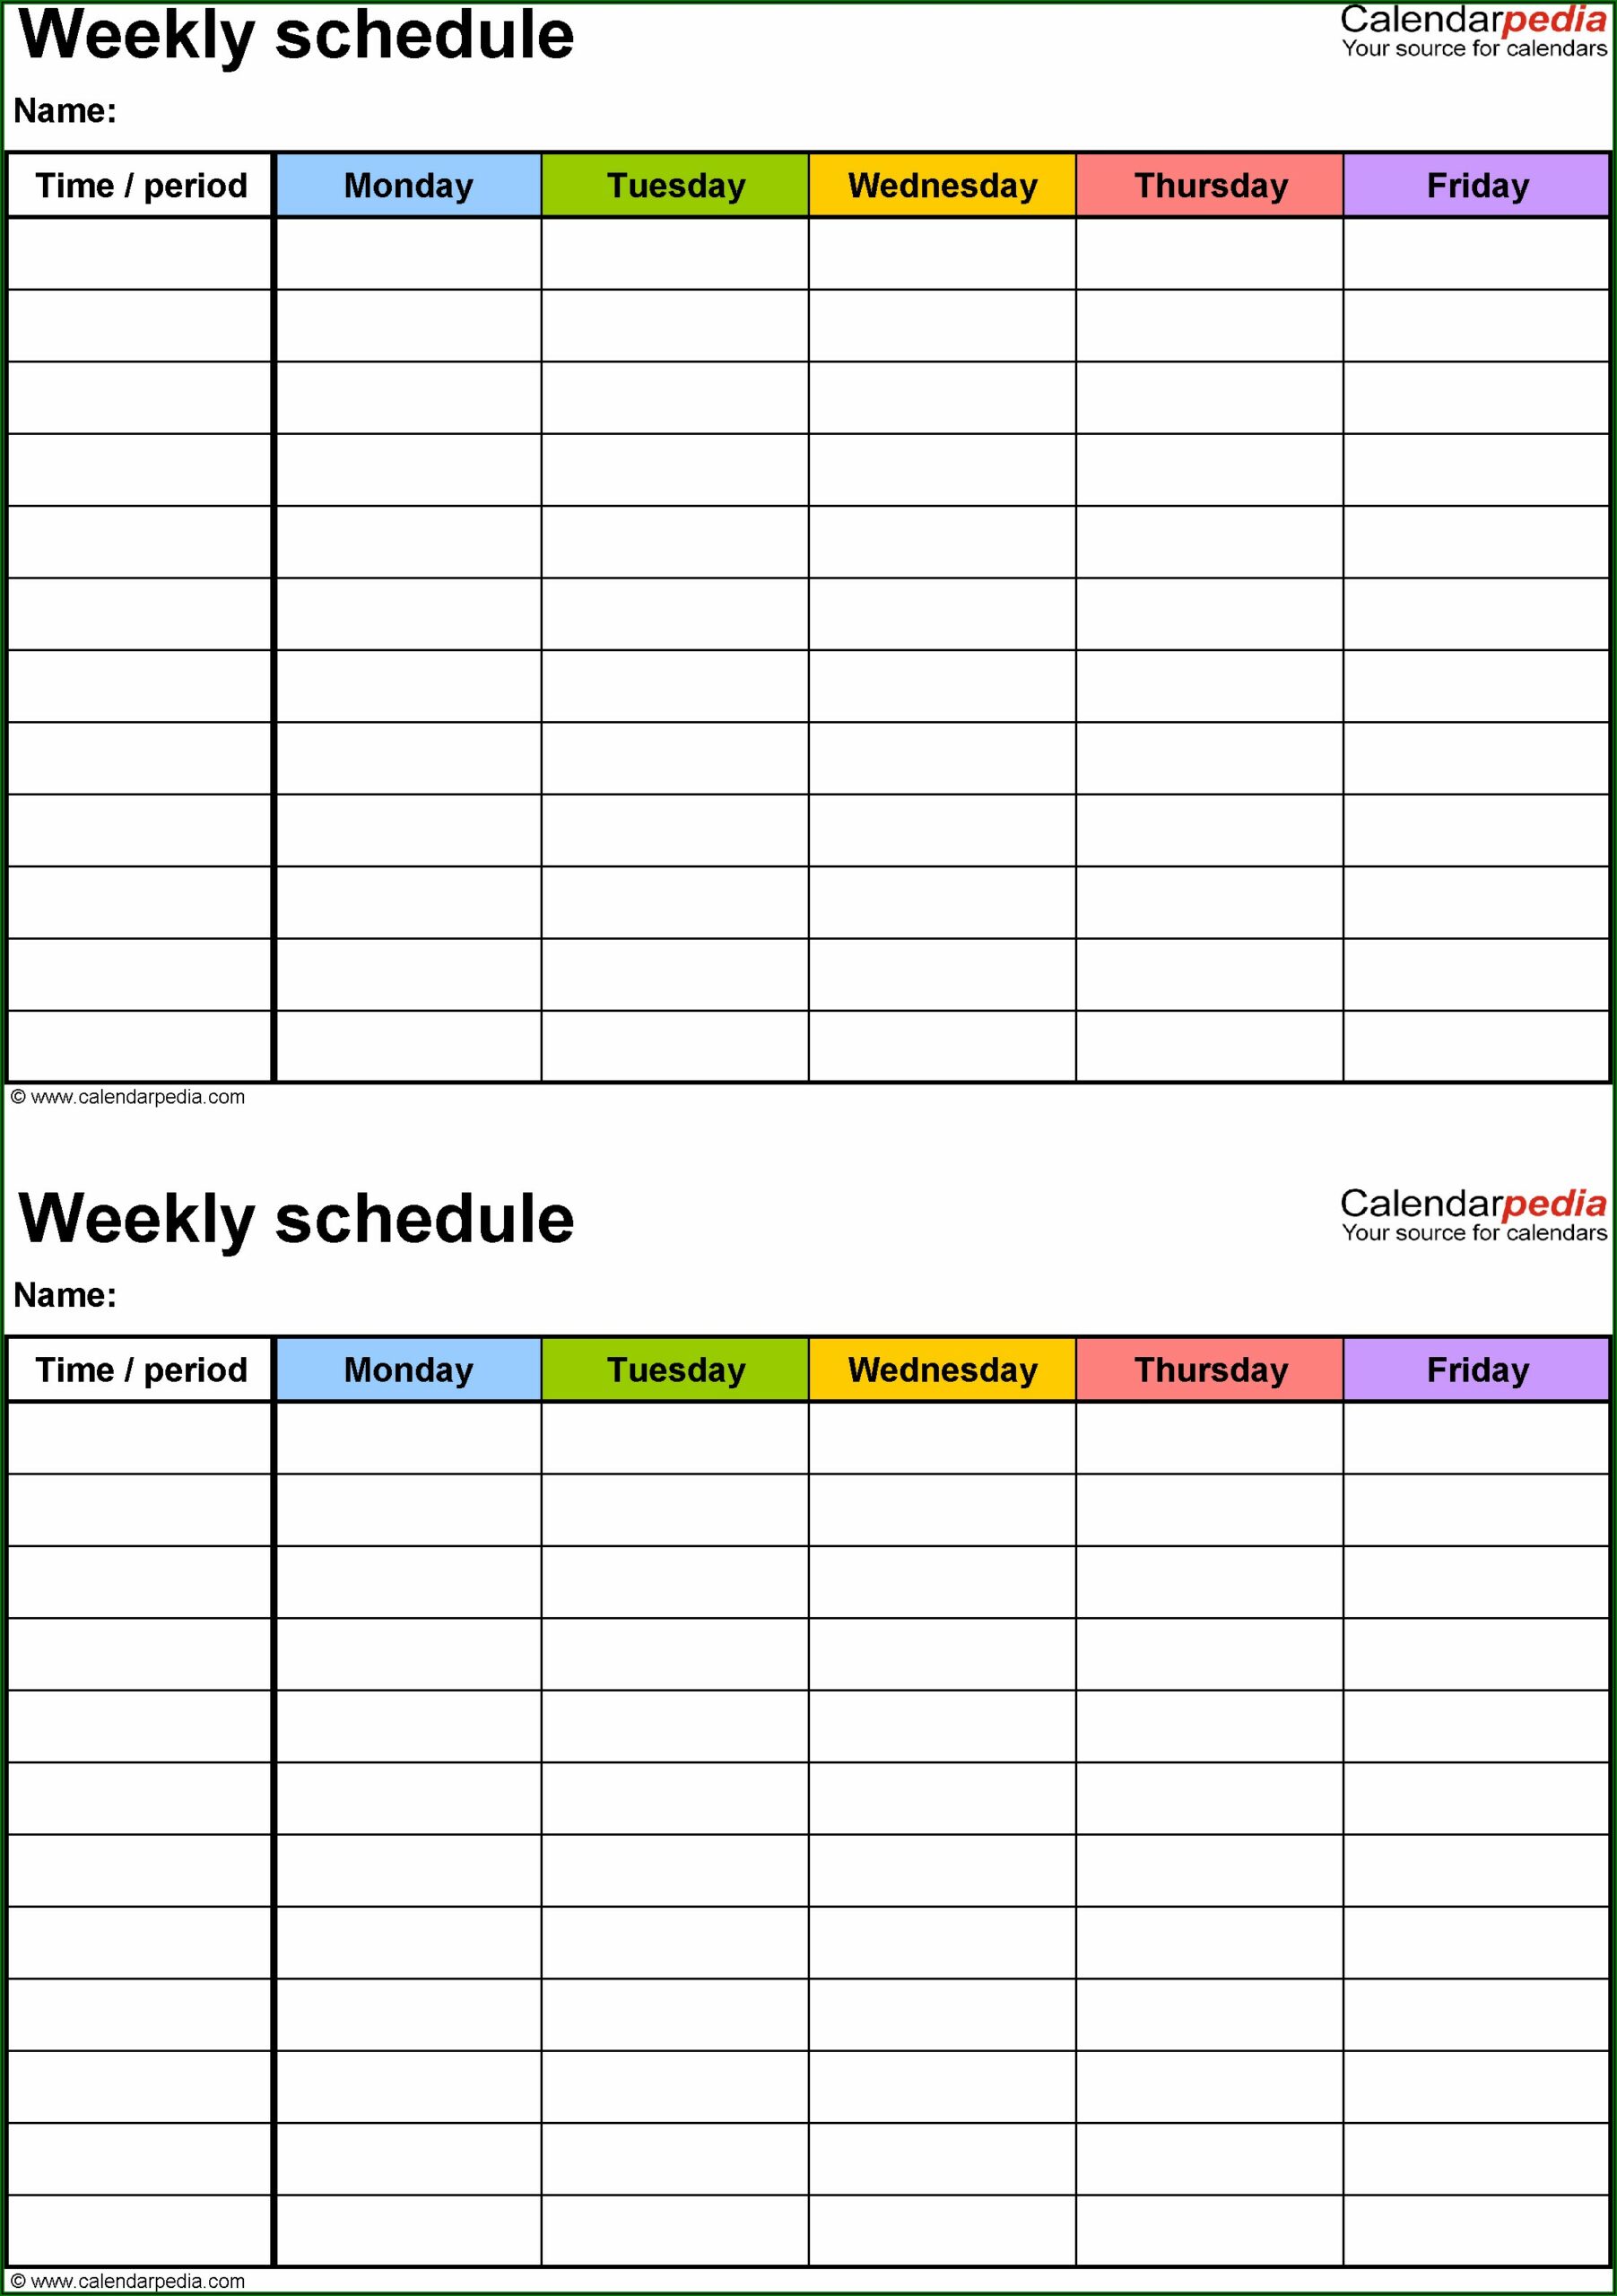 Weekly Schedule Calendar Template Excel